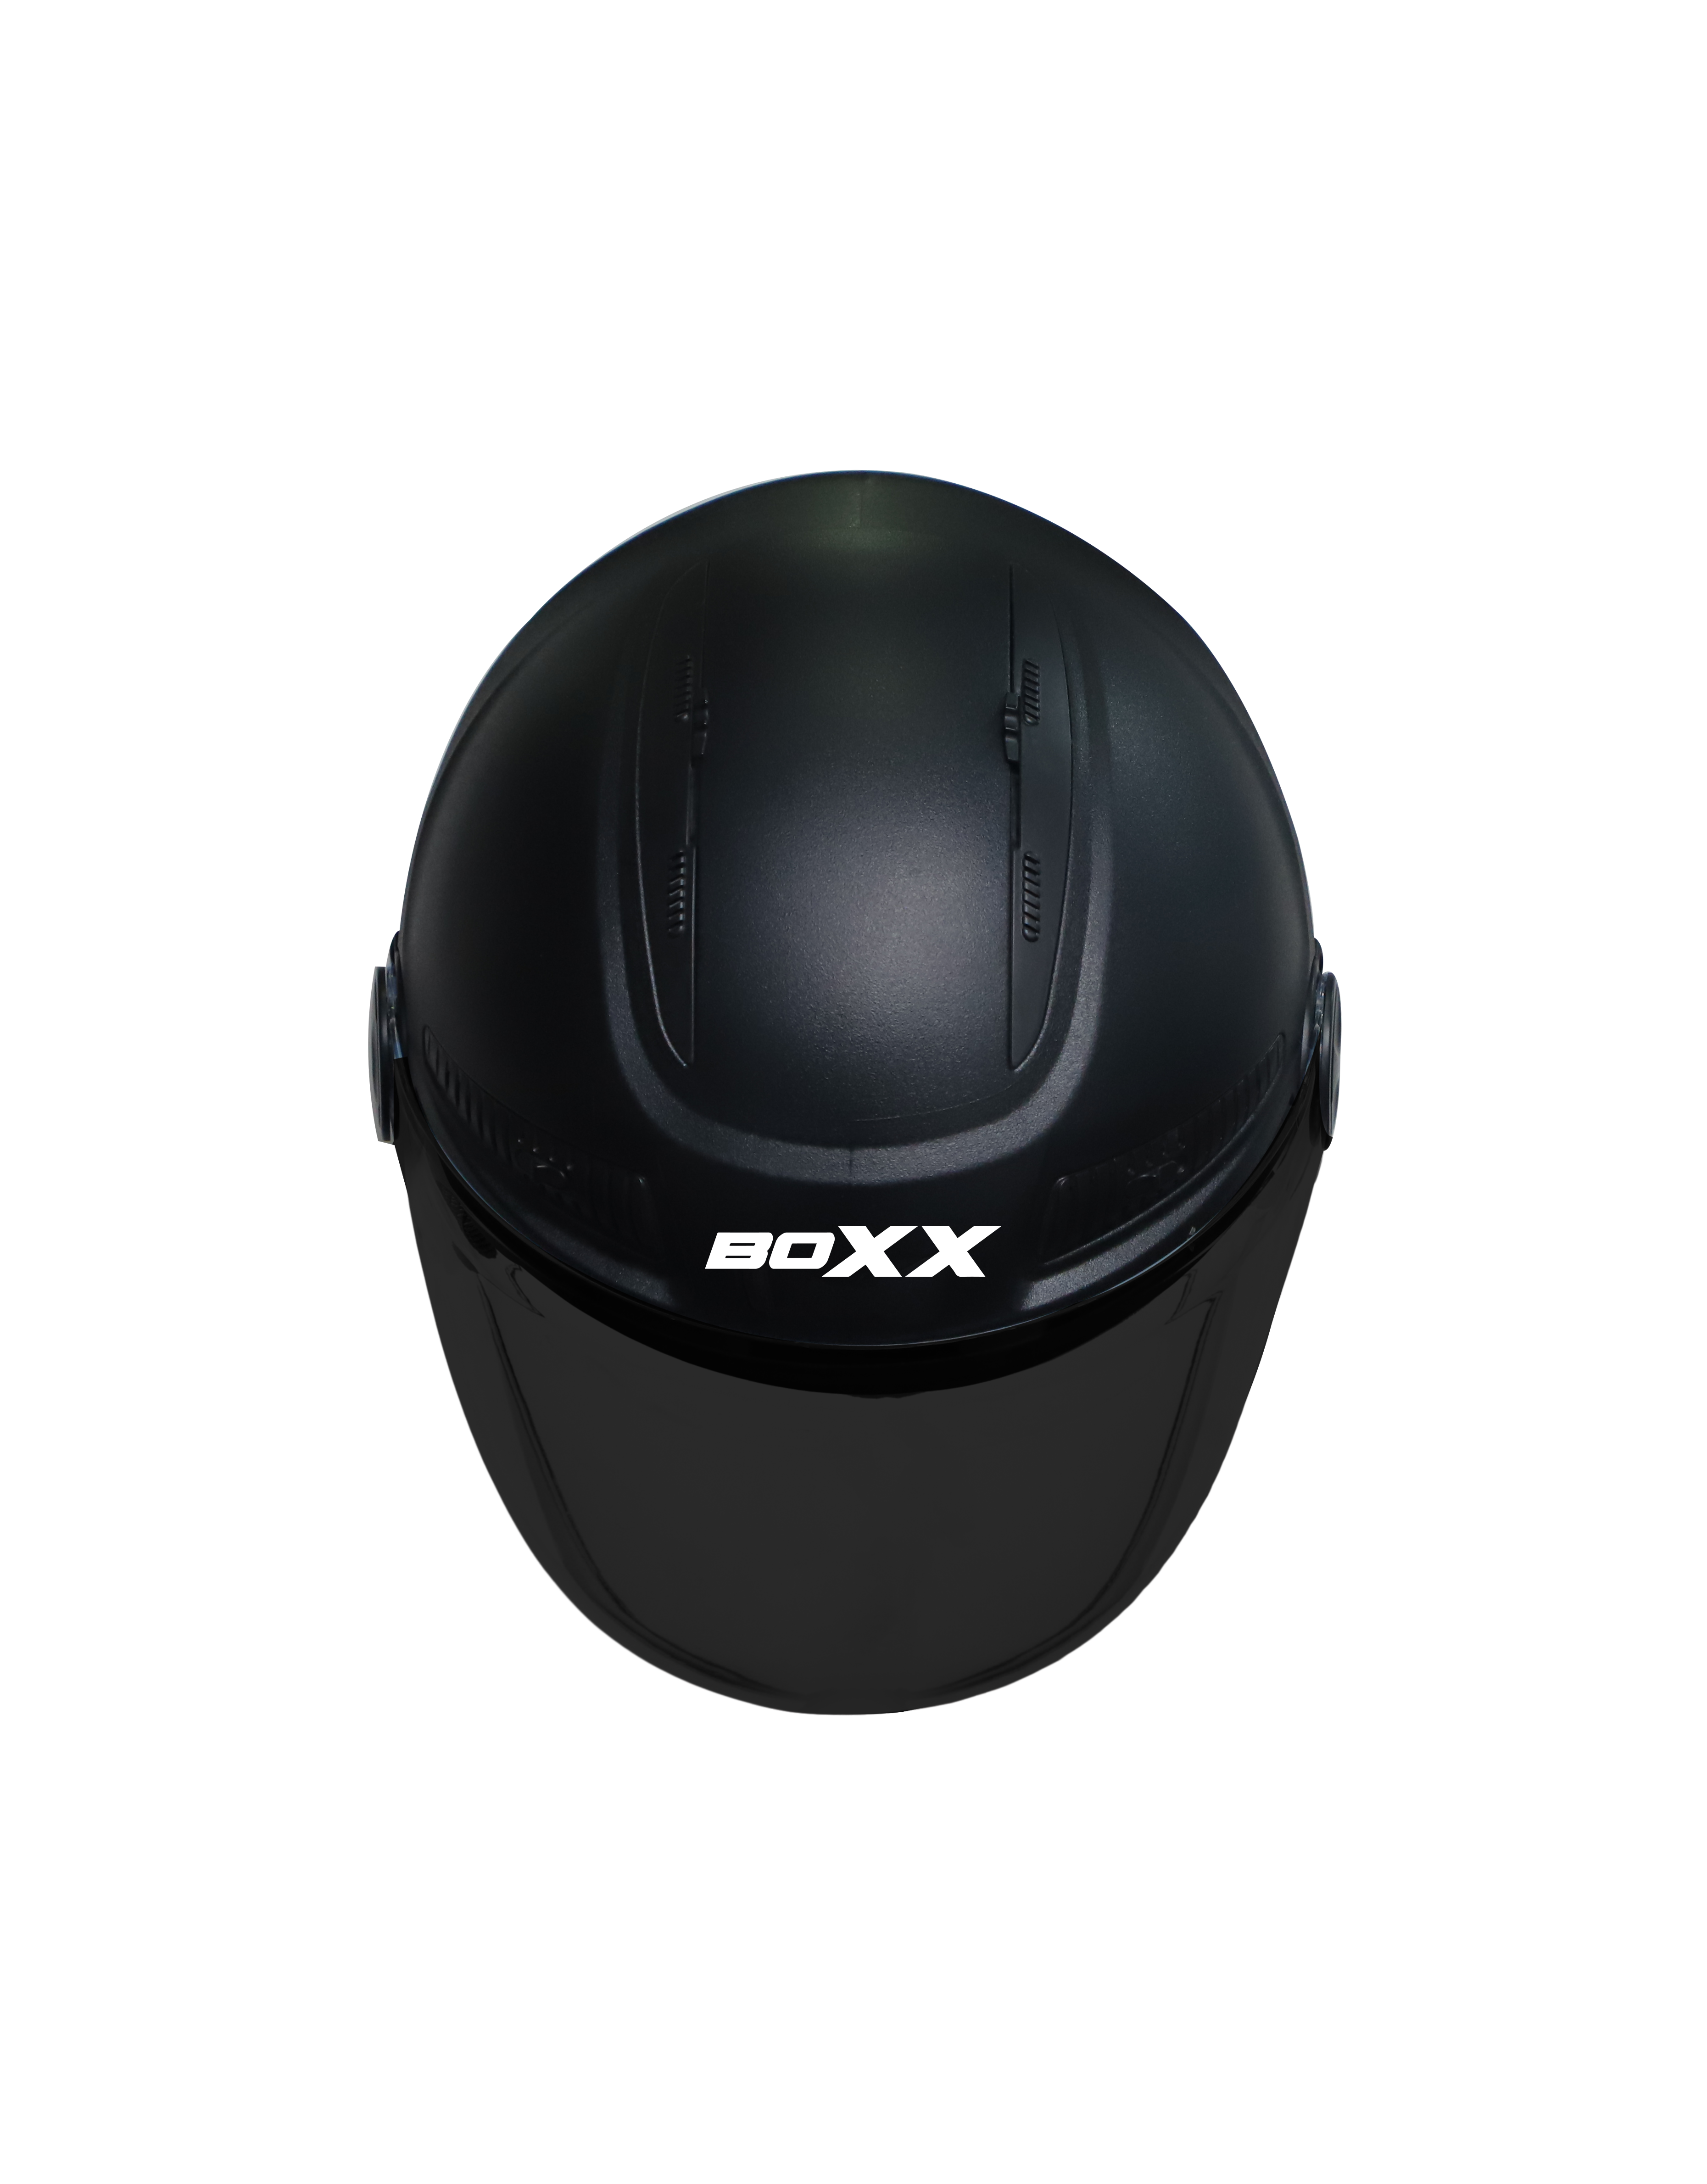 Steelbird SBH-24 Boxx Dashing ISI Certified Open Face Helmet For Men And Women (Black With Smoke Visor)